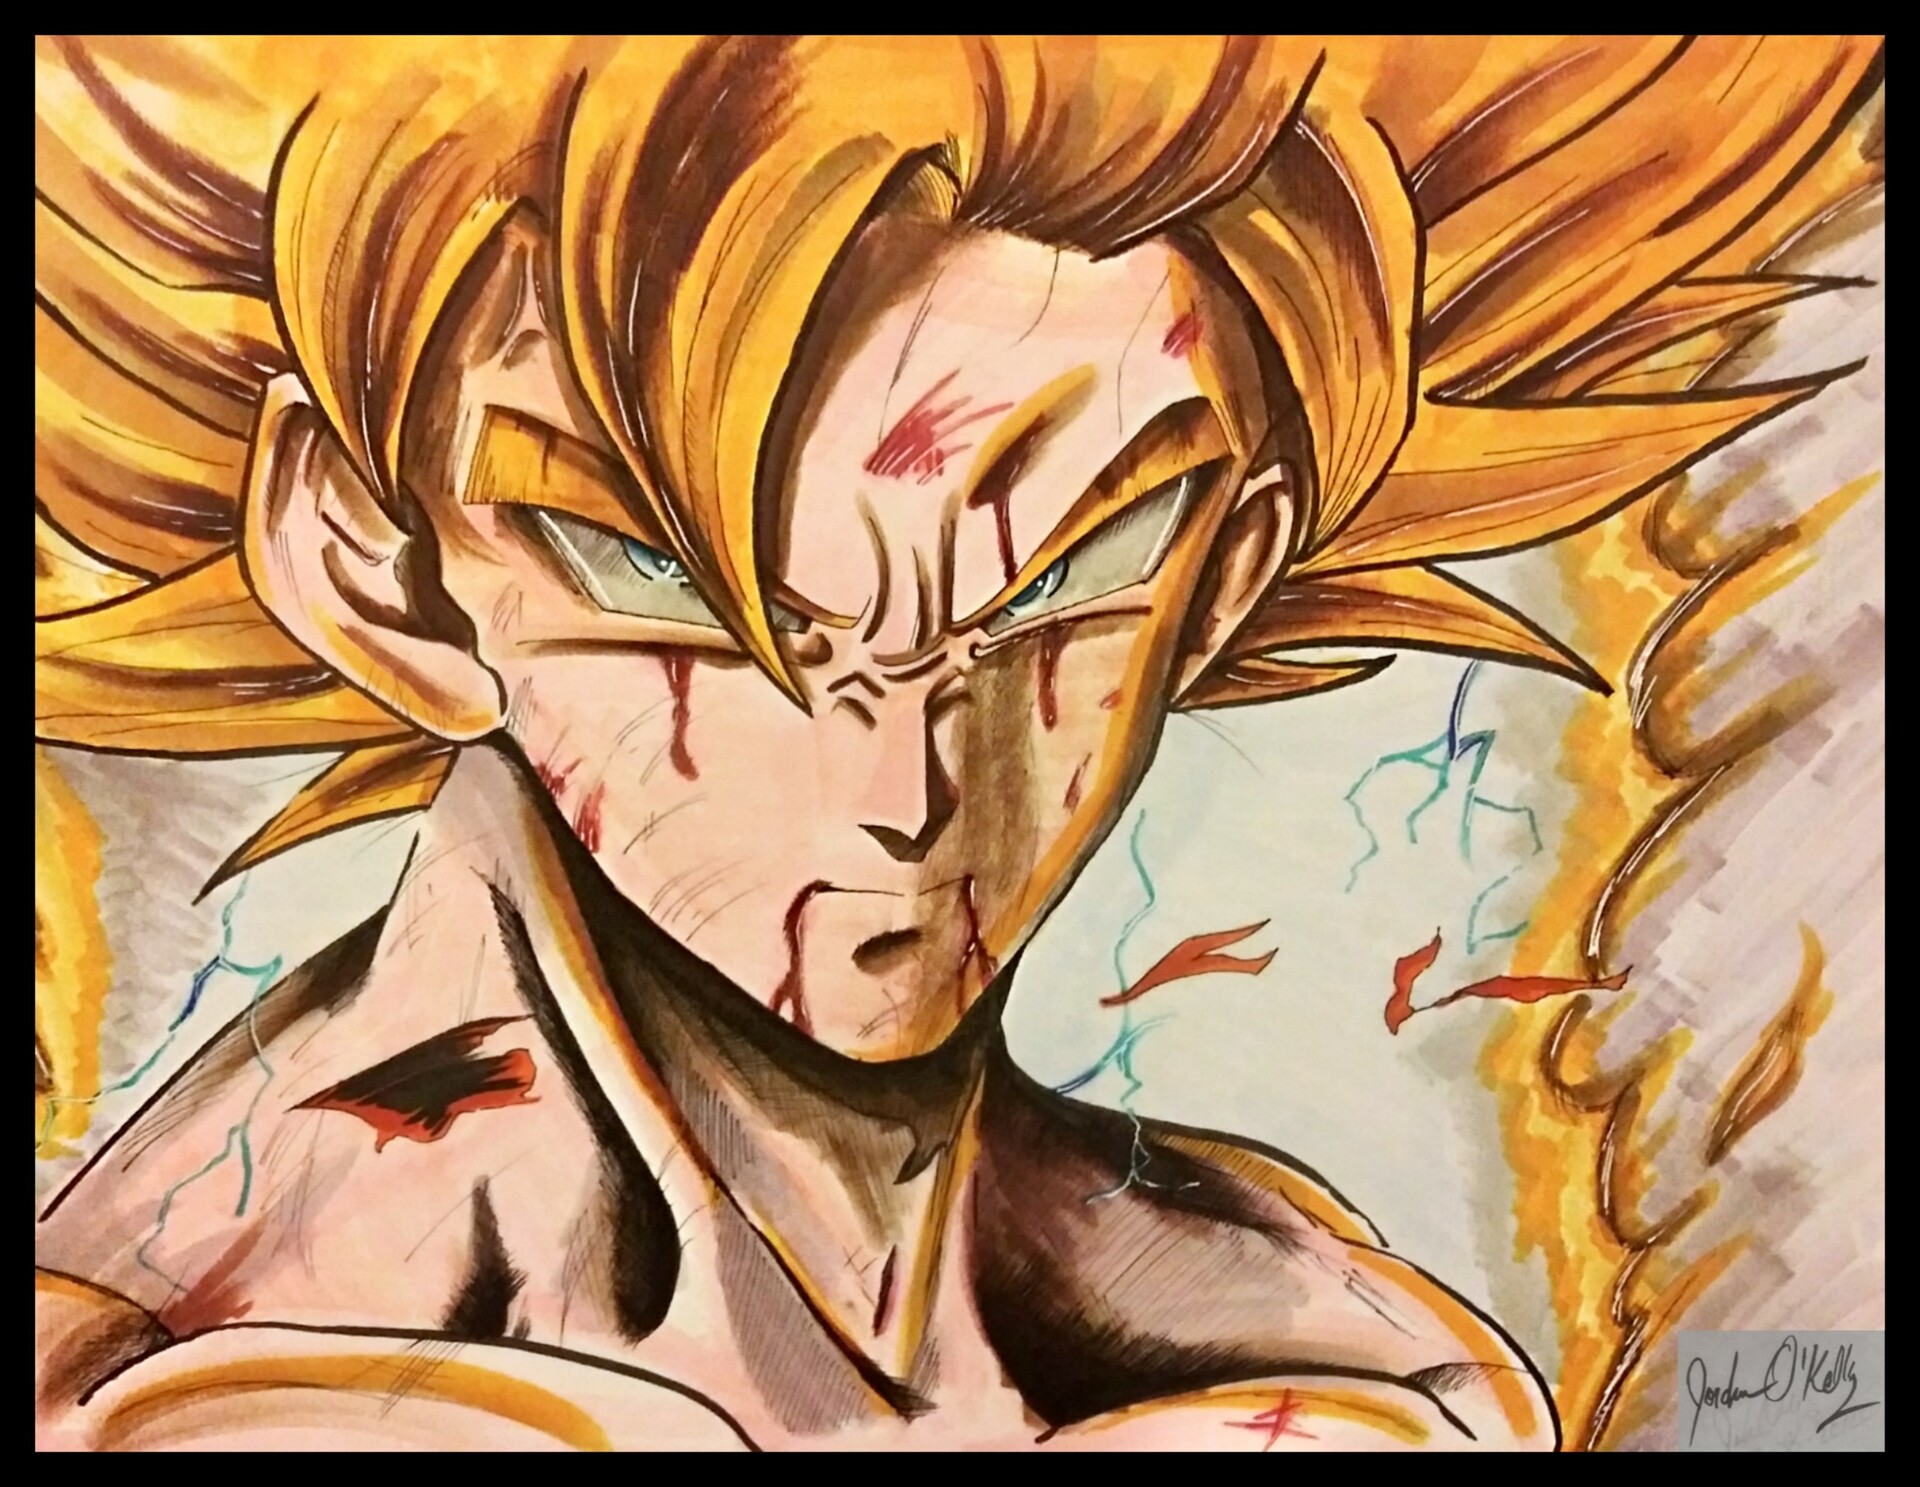 Hoe To Draw Goku Super Saiyan 4, Step by Step, Drawing Guide, by fj_x44 -  DragoArt